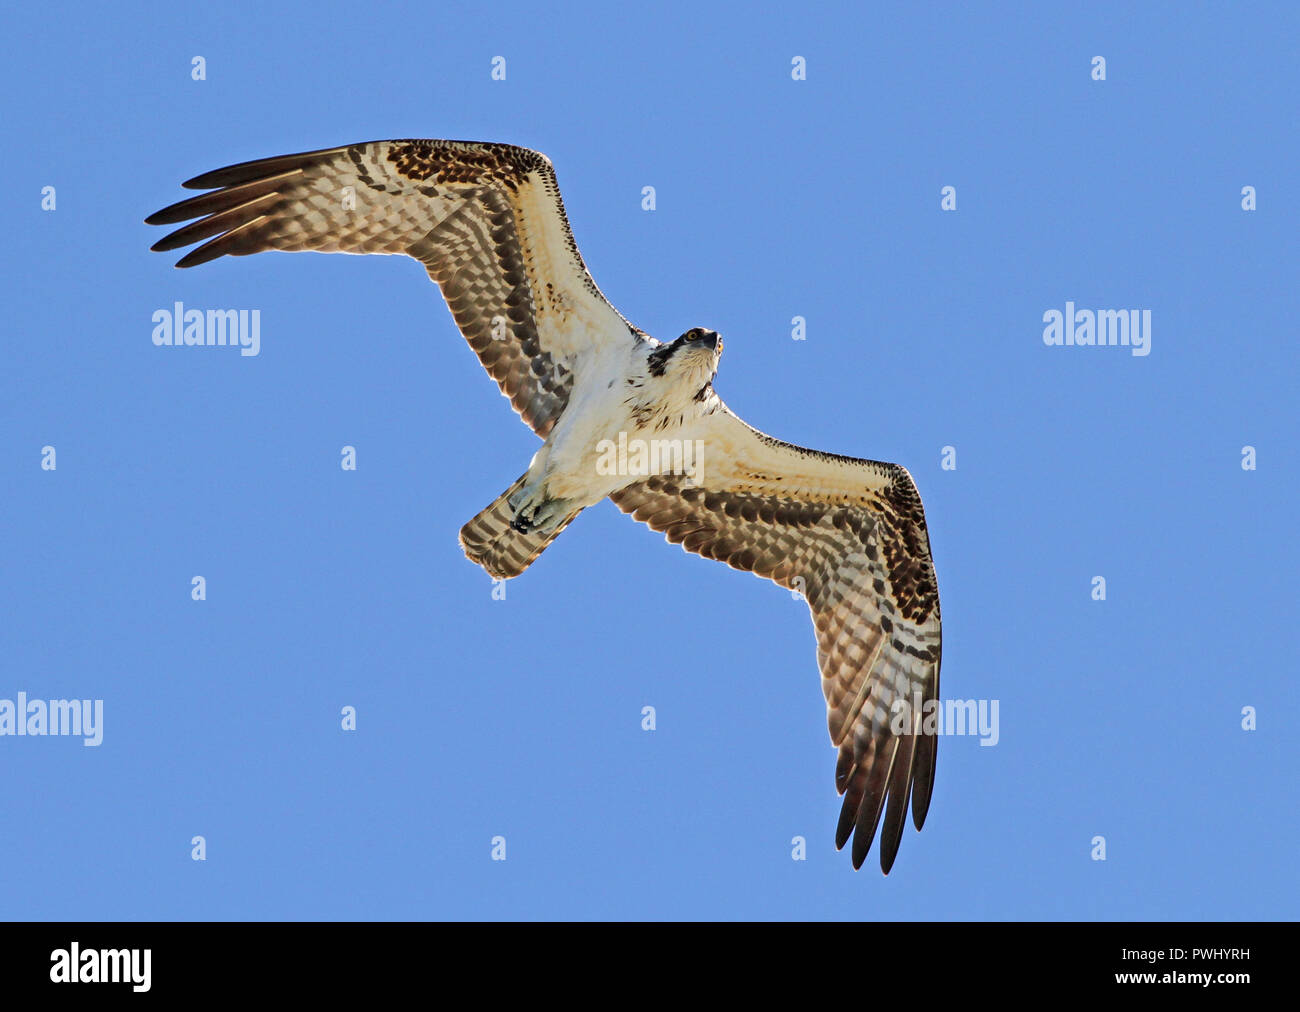 An osprey bird of prey soaring against a blue sky Stock Photo